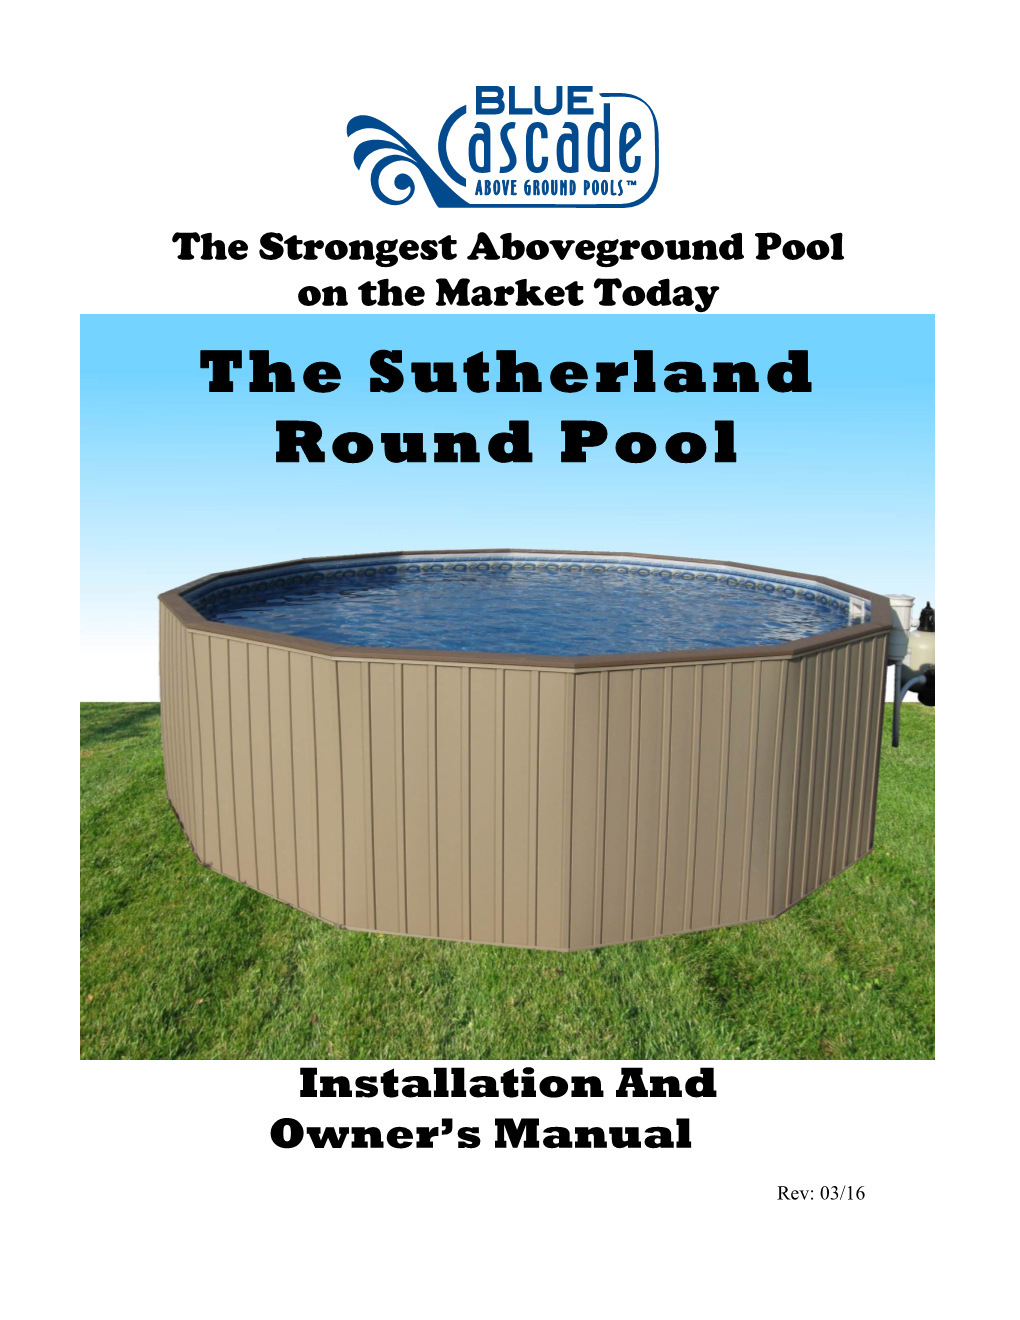 The Sutherland Round Pool